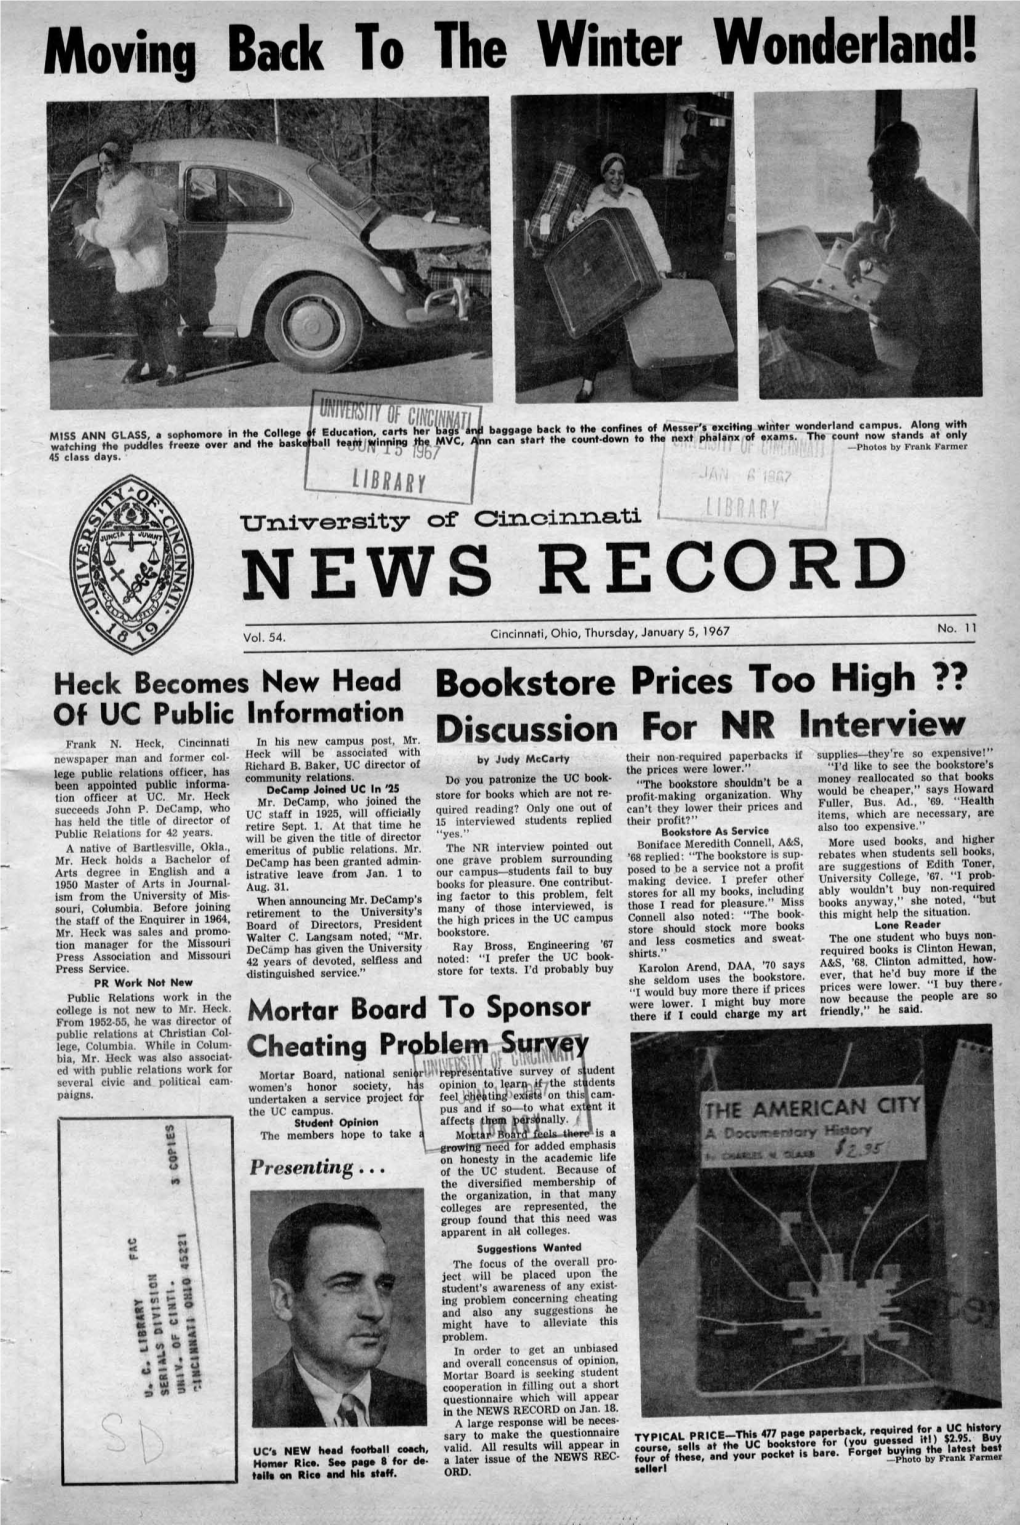 University of Cincinnati News Record. Thursday, January 5, 1967. Vol. LIIII